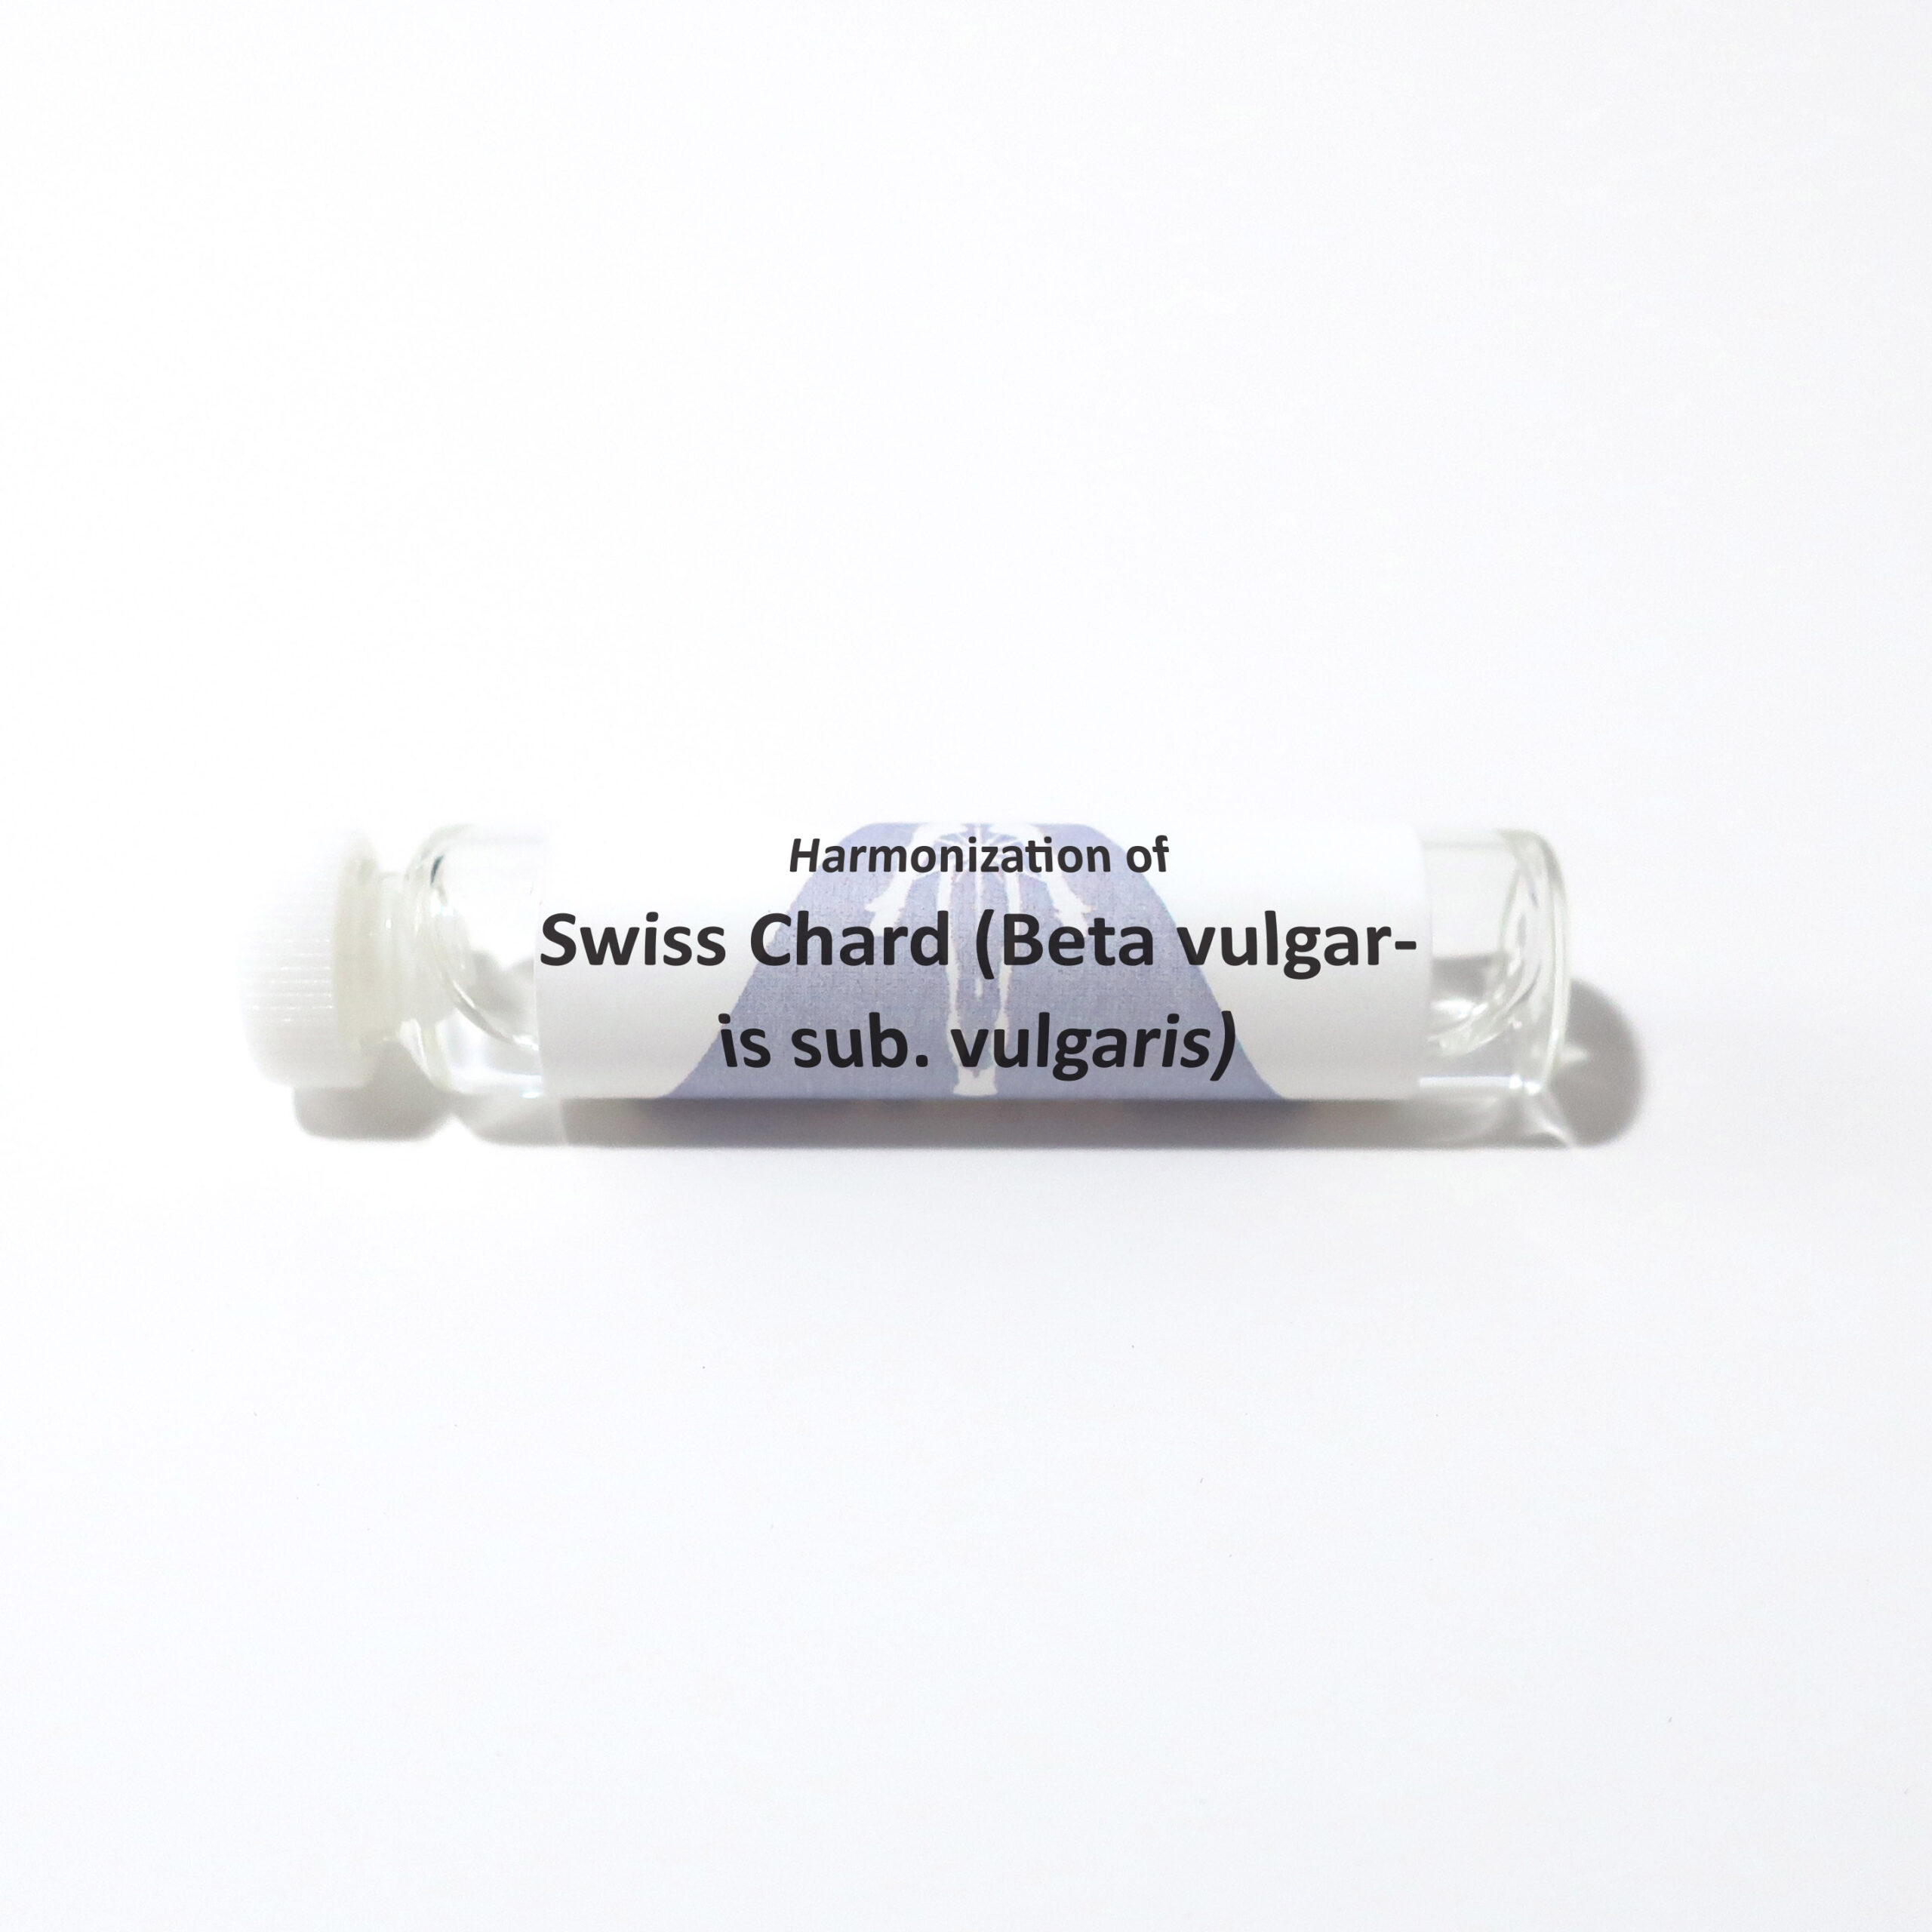 Swiss Chard (Beta vulgaris sub. Vulgaris)